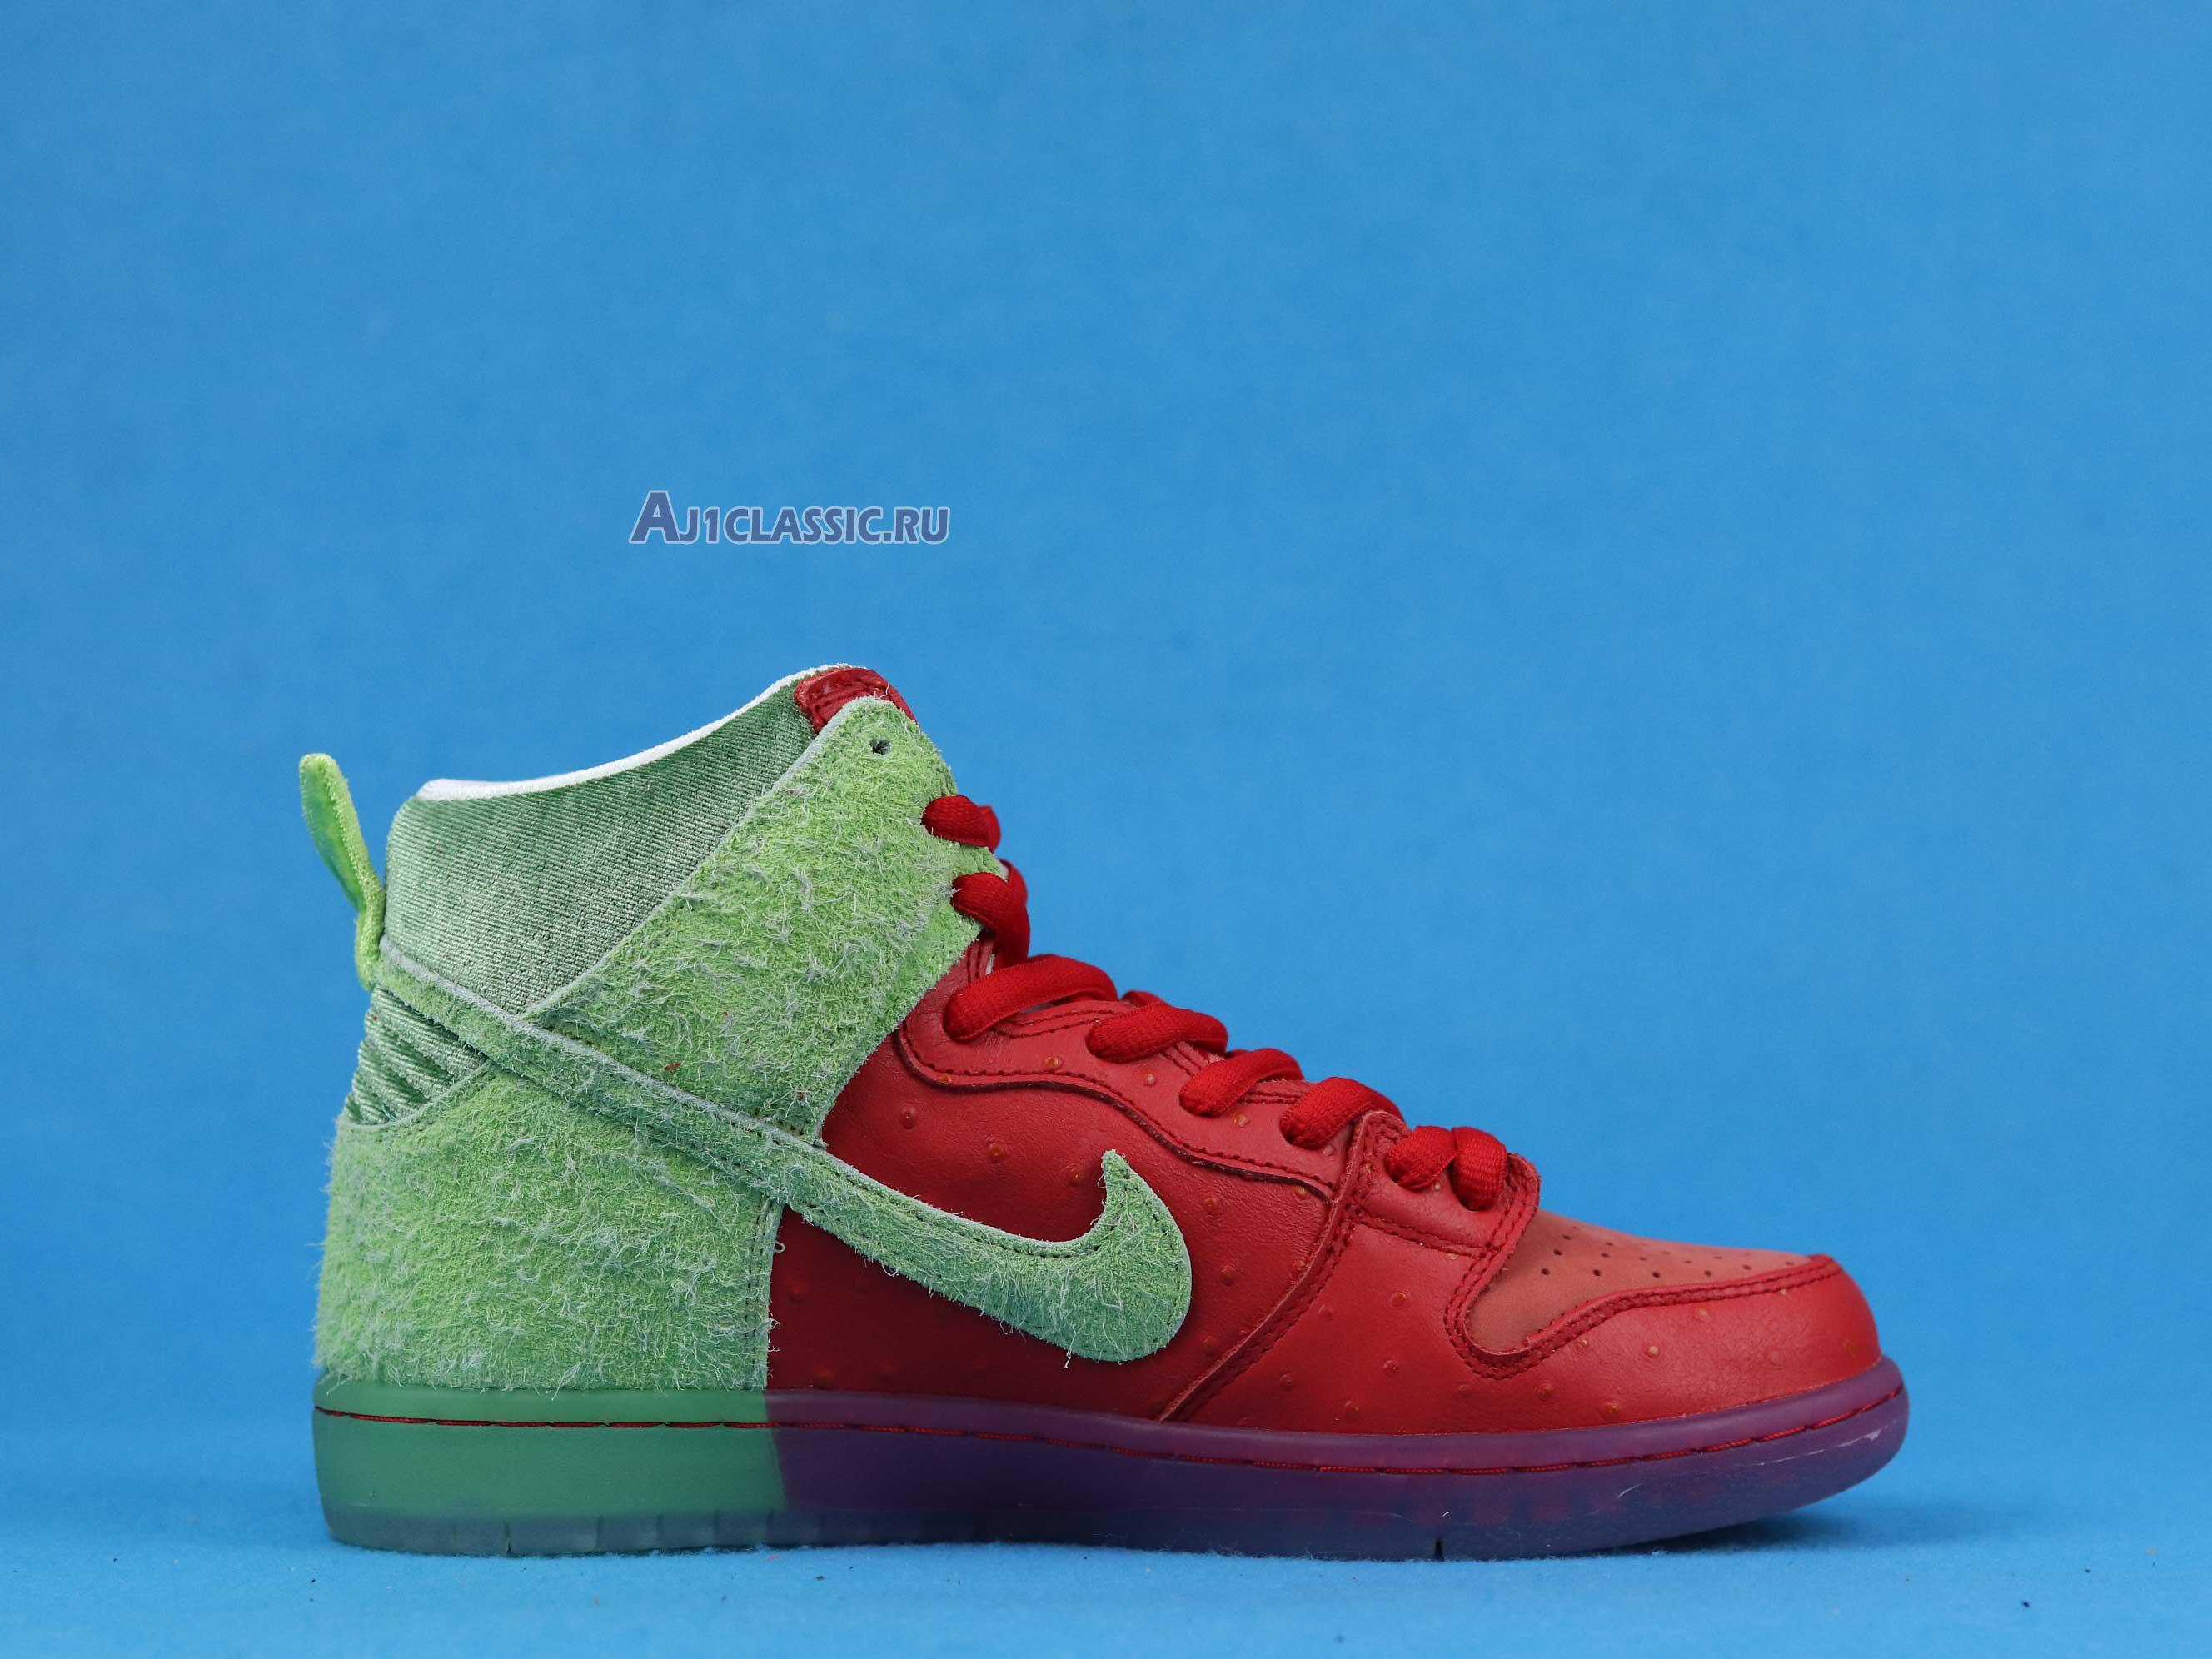 Nike Dunk High SB "Strawberry Cough" CW7093-600